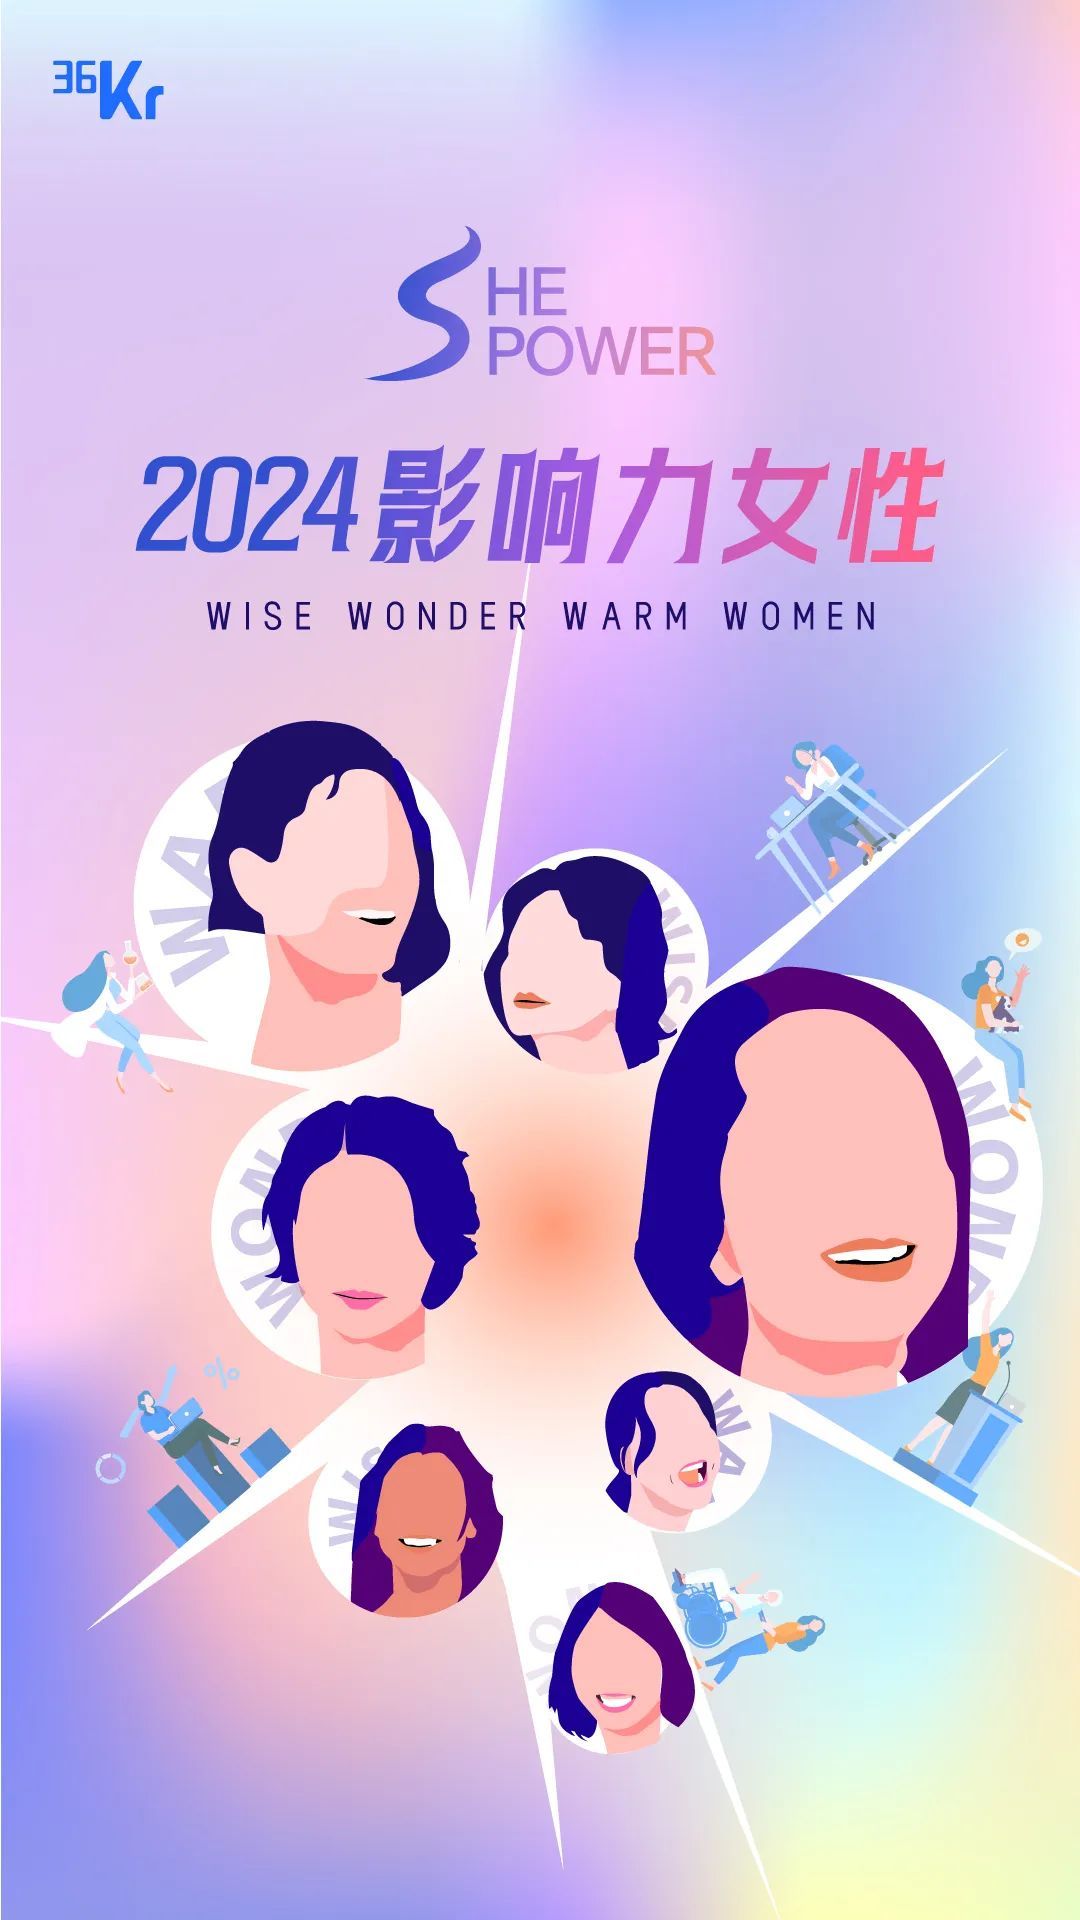 「SHE POWER·2024影响力女性」招募启动，与36氪一起寻找「热辣滚烫」的她们